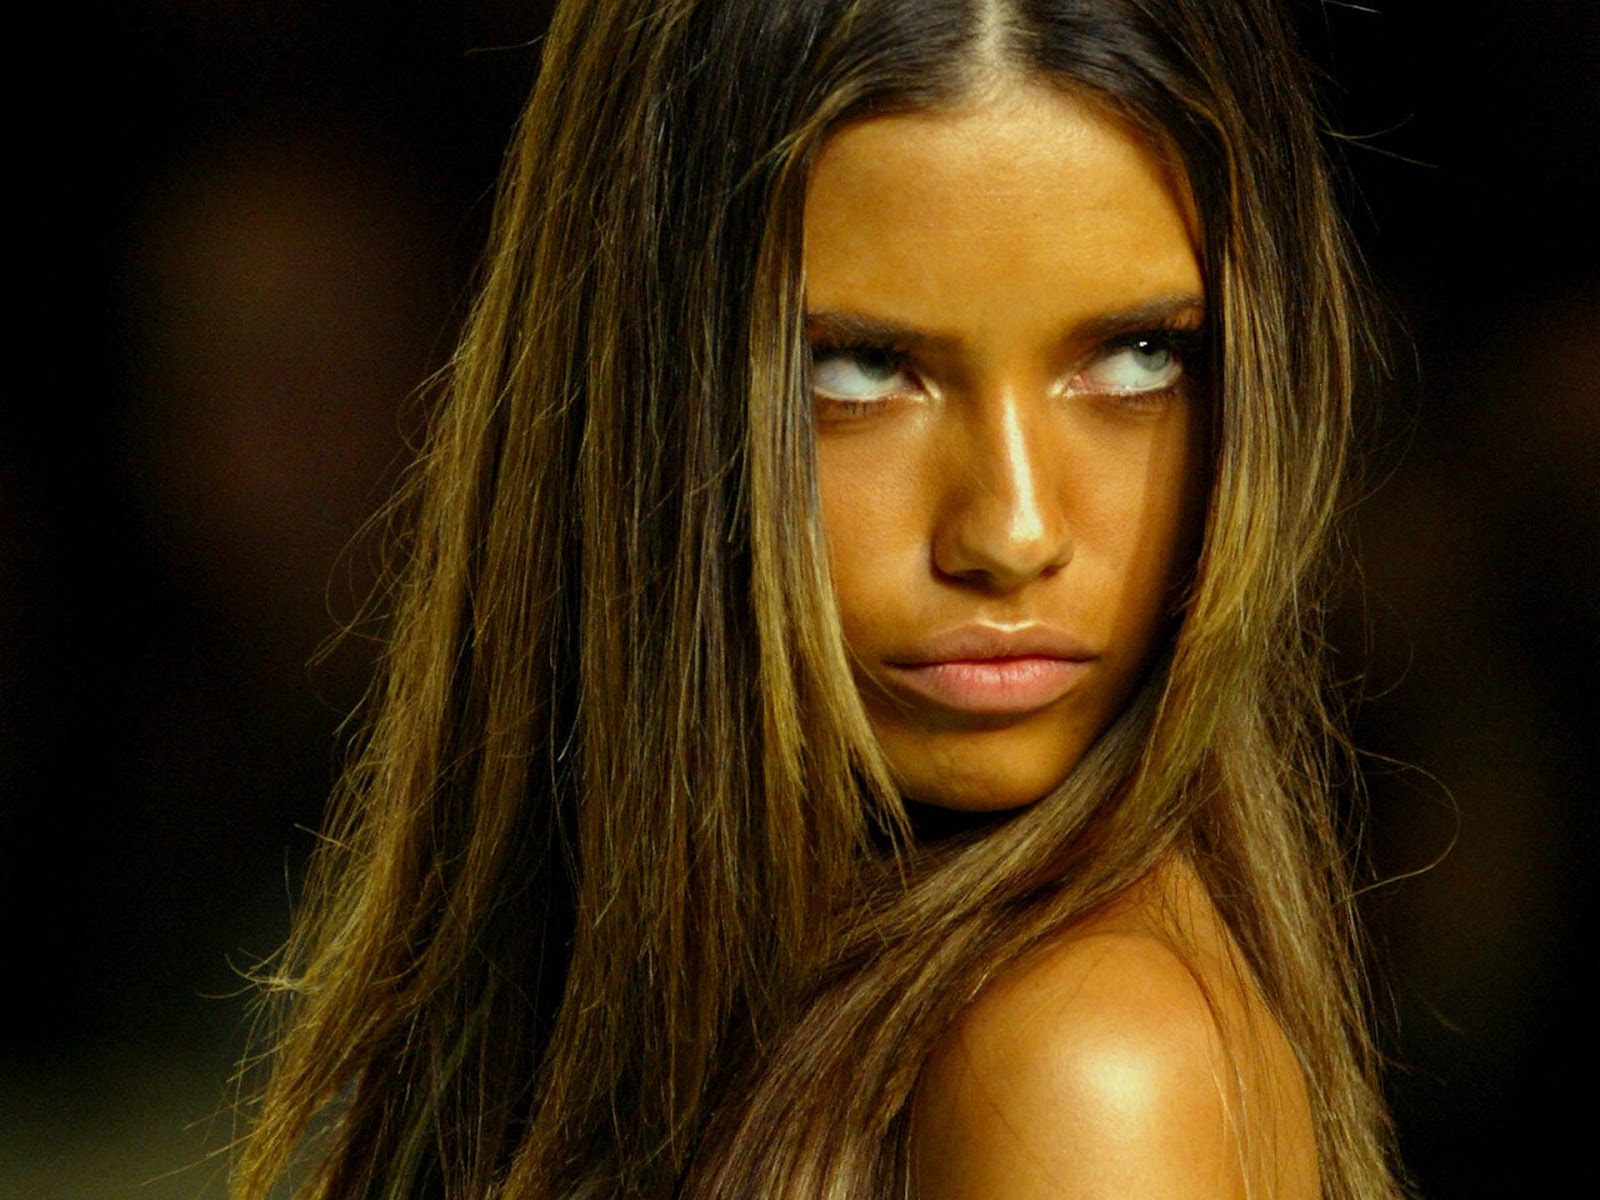 The Amazing Brazilian Model Adriana Lima Free Wallpapers Macromattersblog 